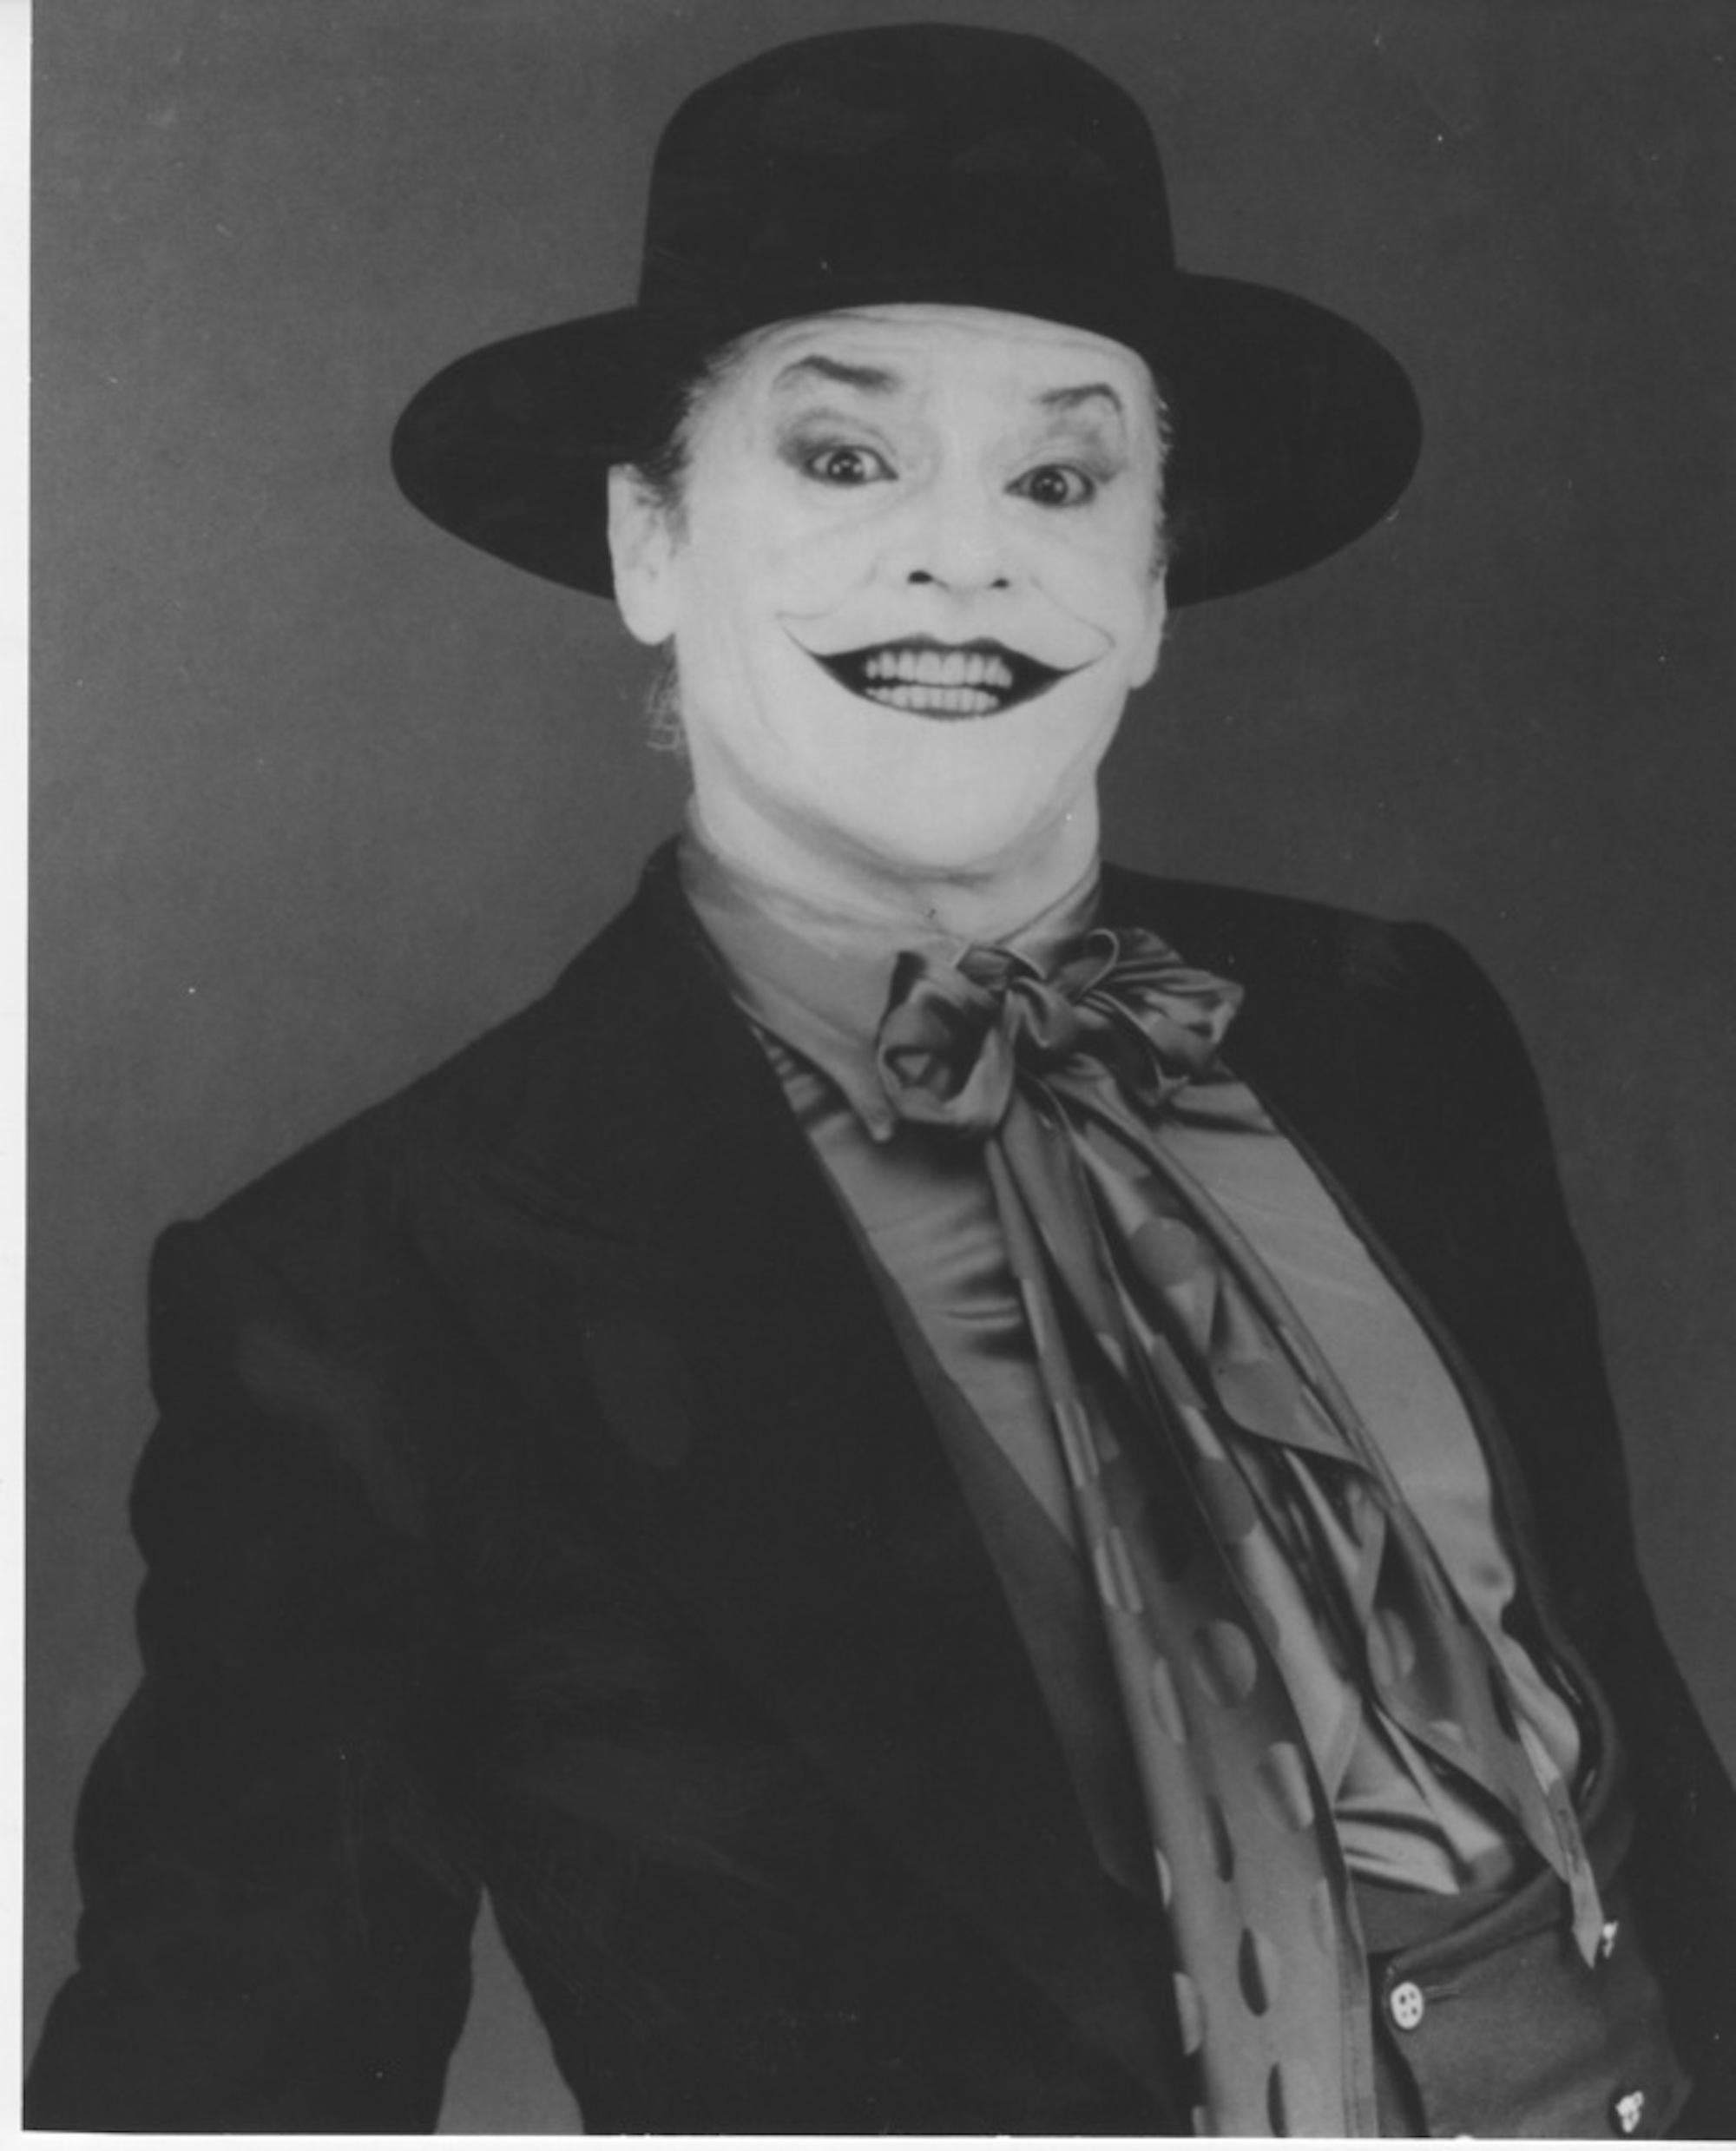 Unknown Figurative Photograph - Jack Nicholson on the Set of "The Batman" - Vintage Photo -1989